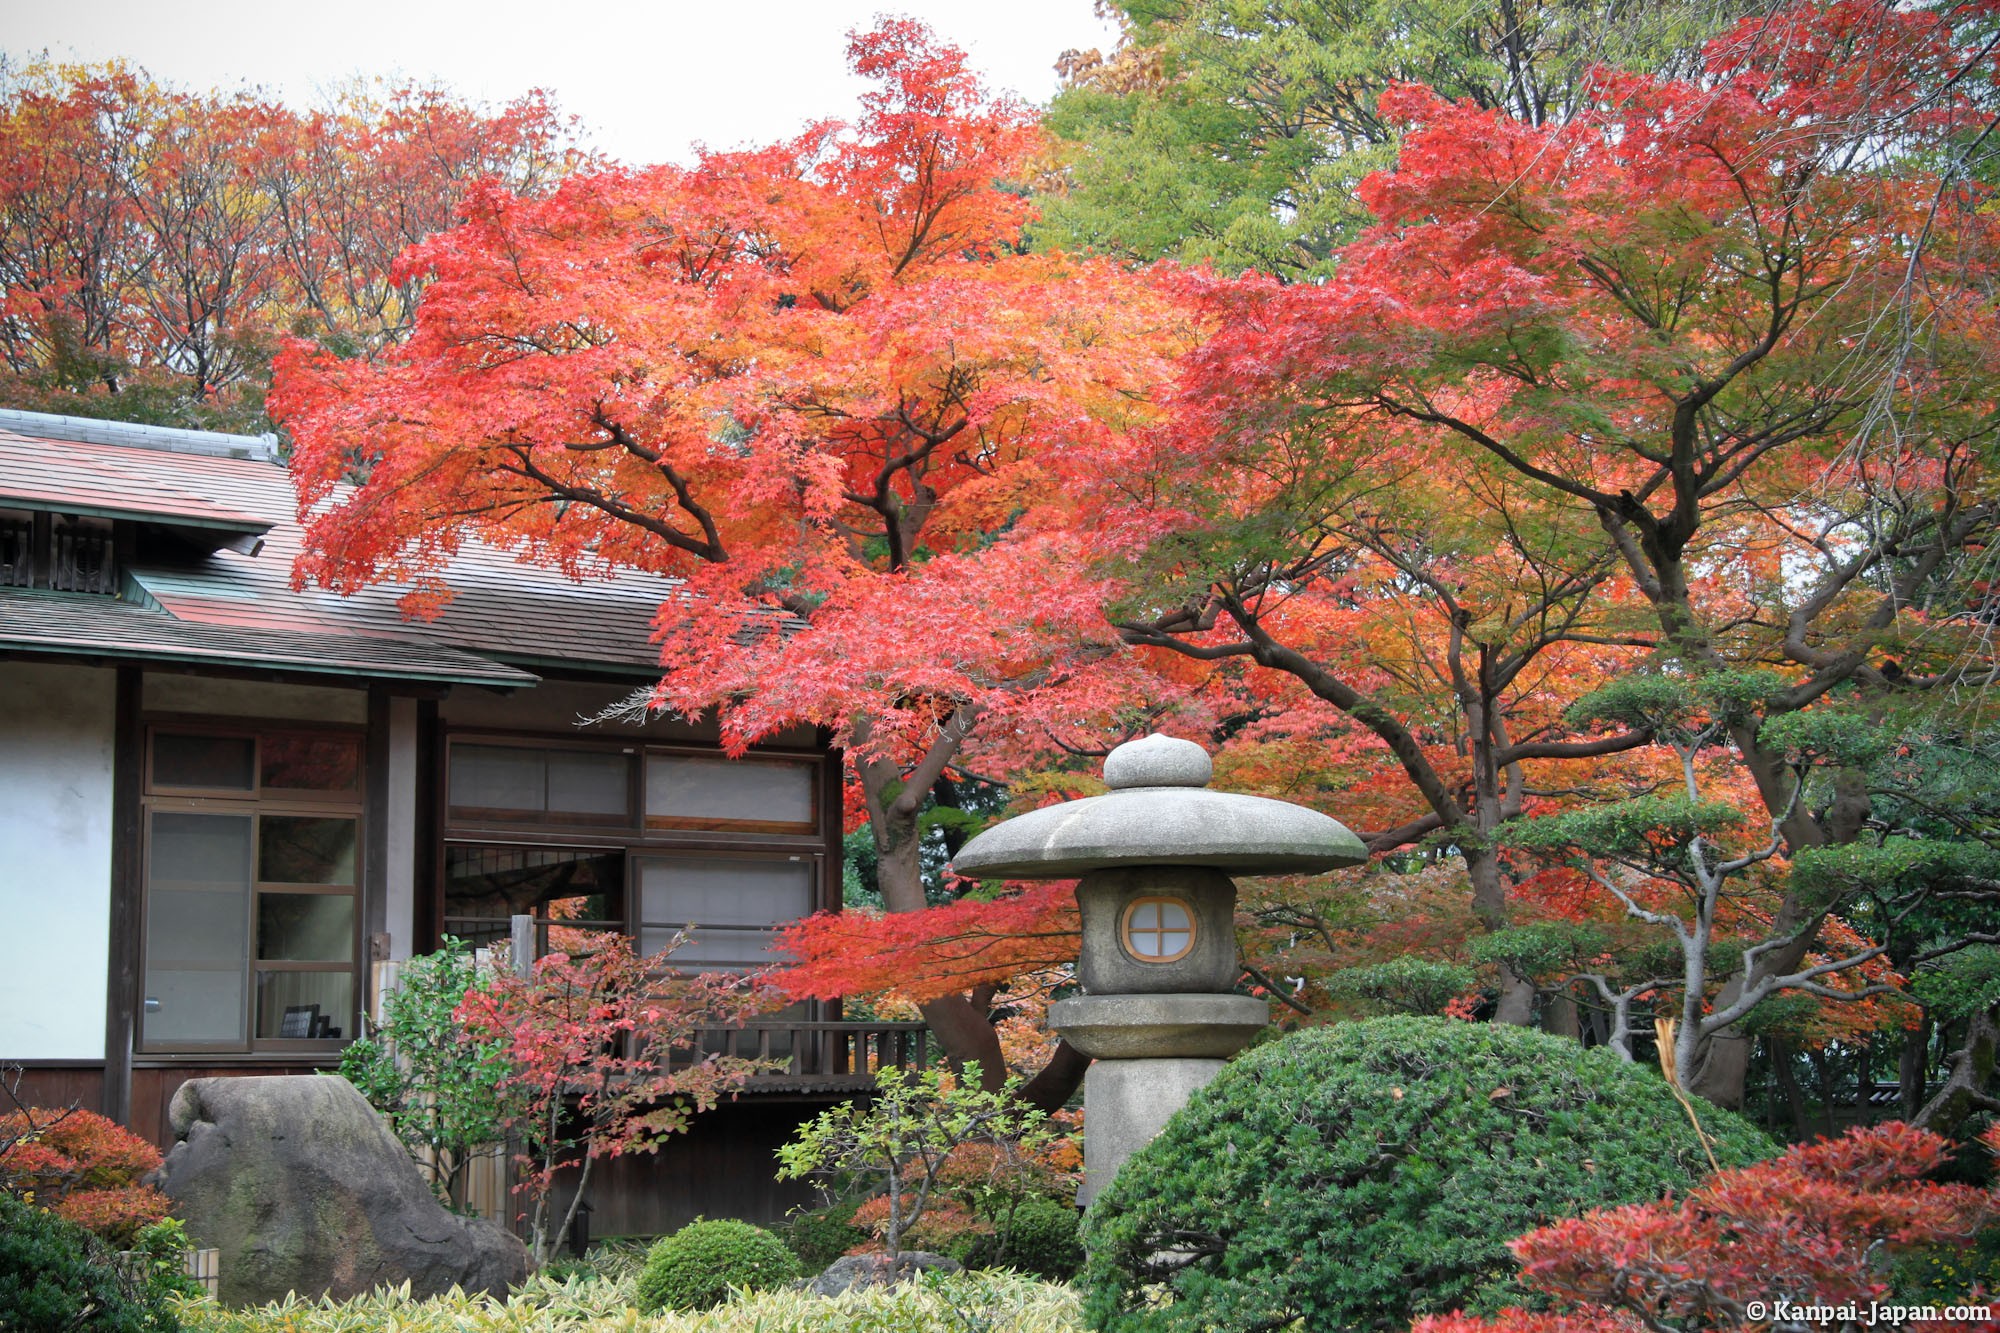 Koyo: Japanese maple trees' red leaves - Momijigari: contemplating momiji  in the fall season